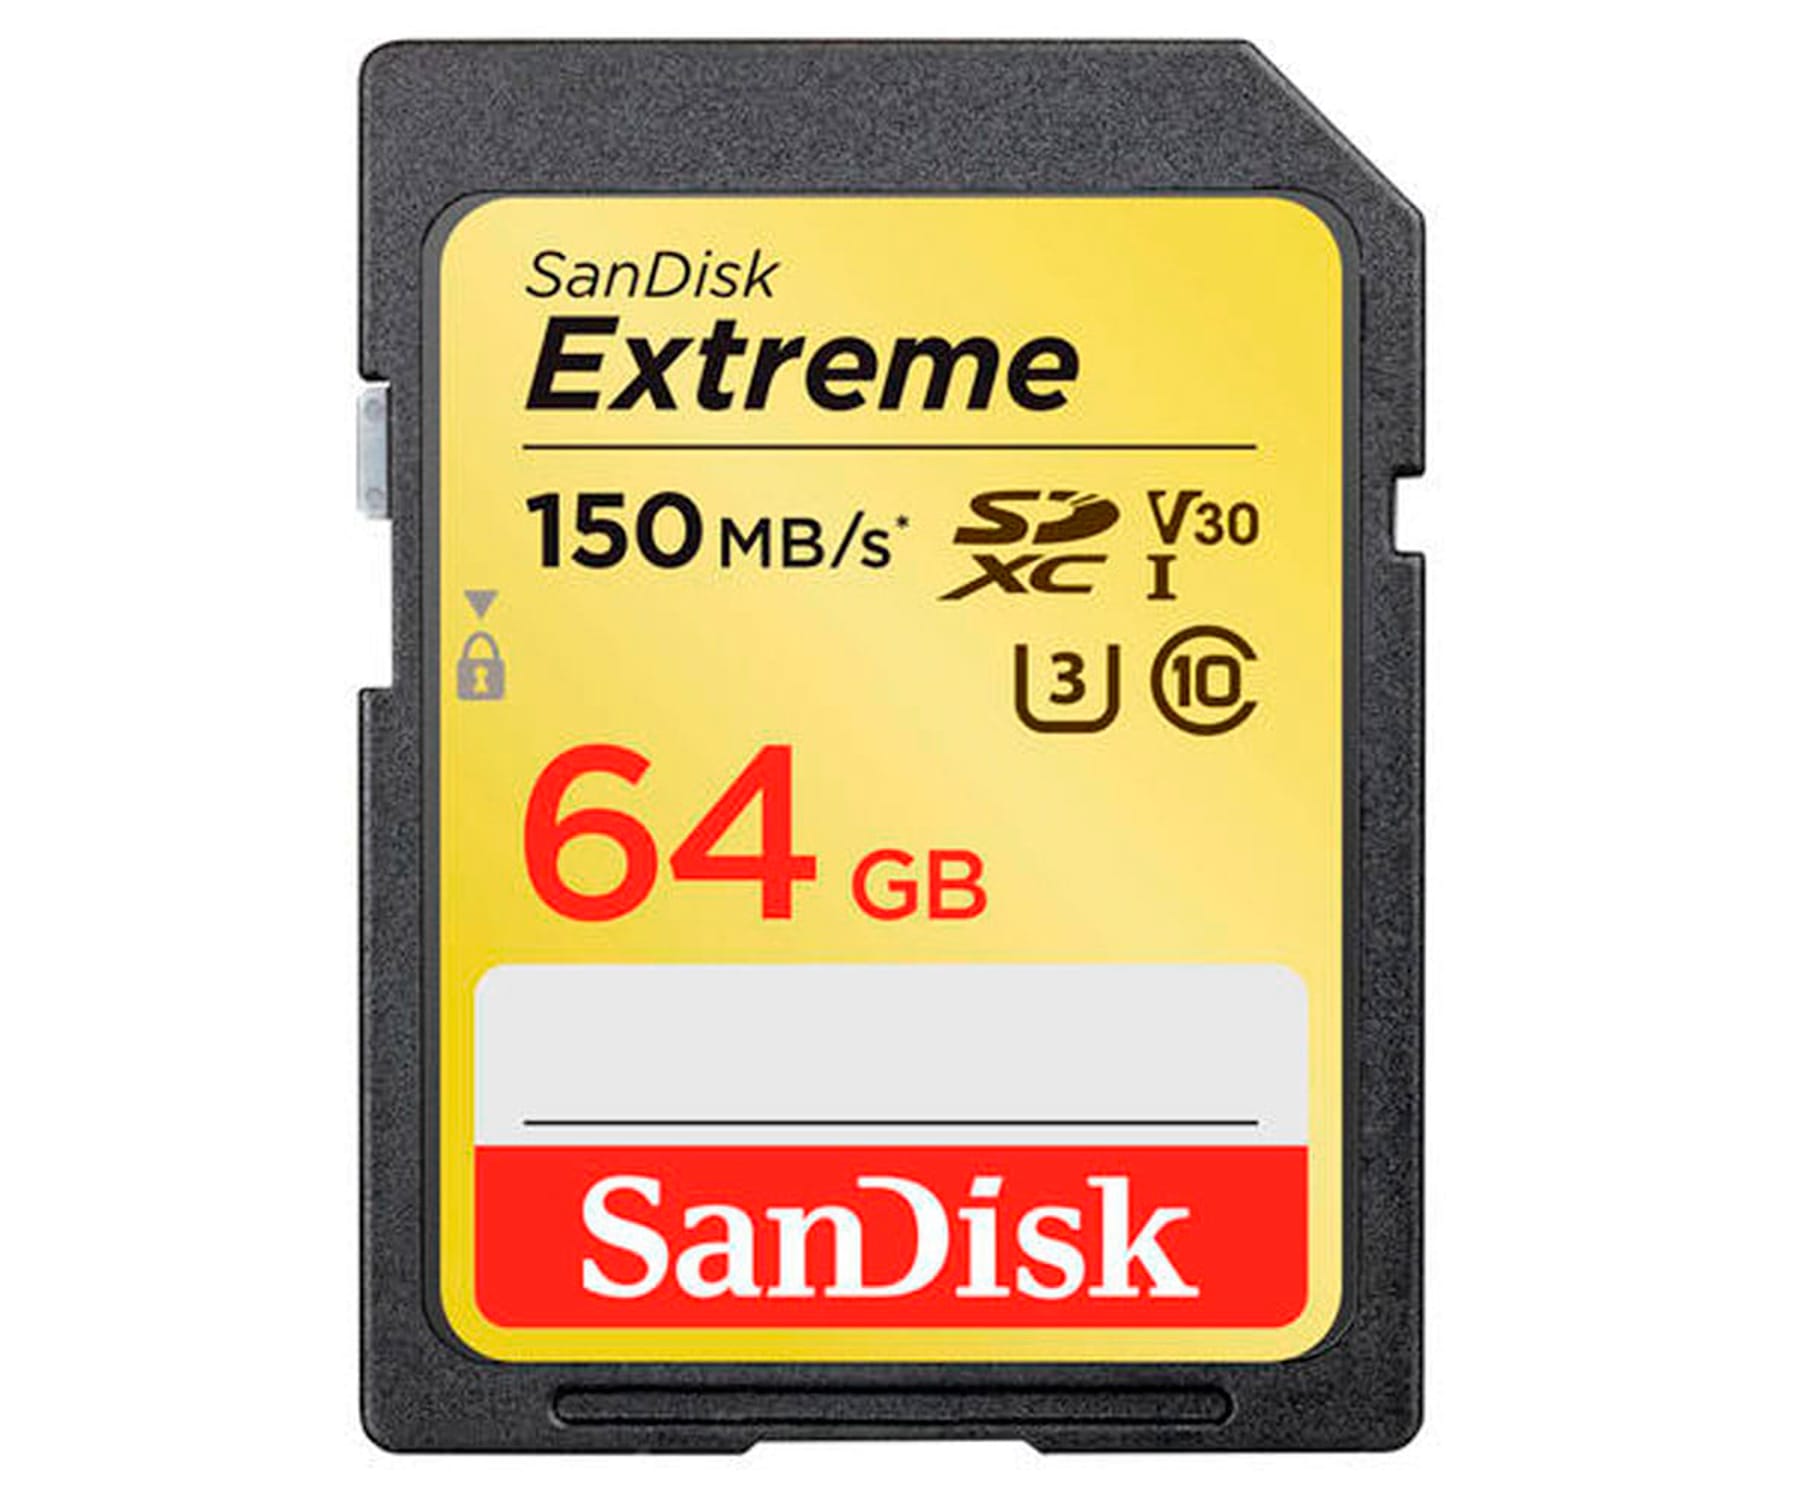 SANDISK EXTREME TARJETA DE MEMORIA SDXV C10 UHS-I U3 DE 64 GB Y 150MB/S